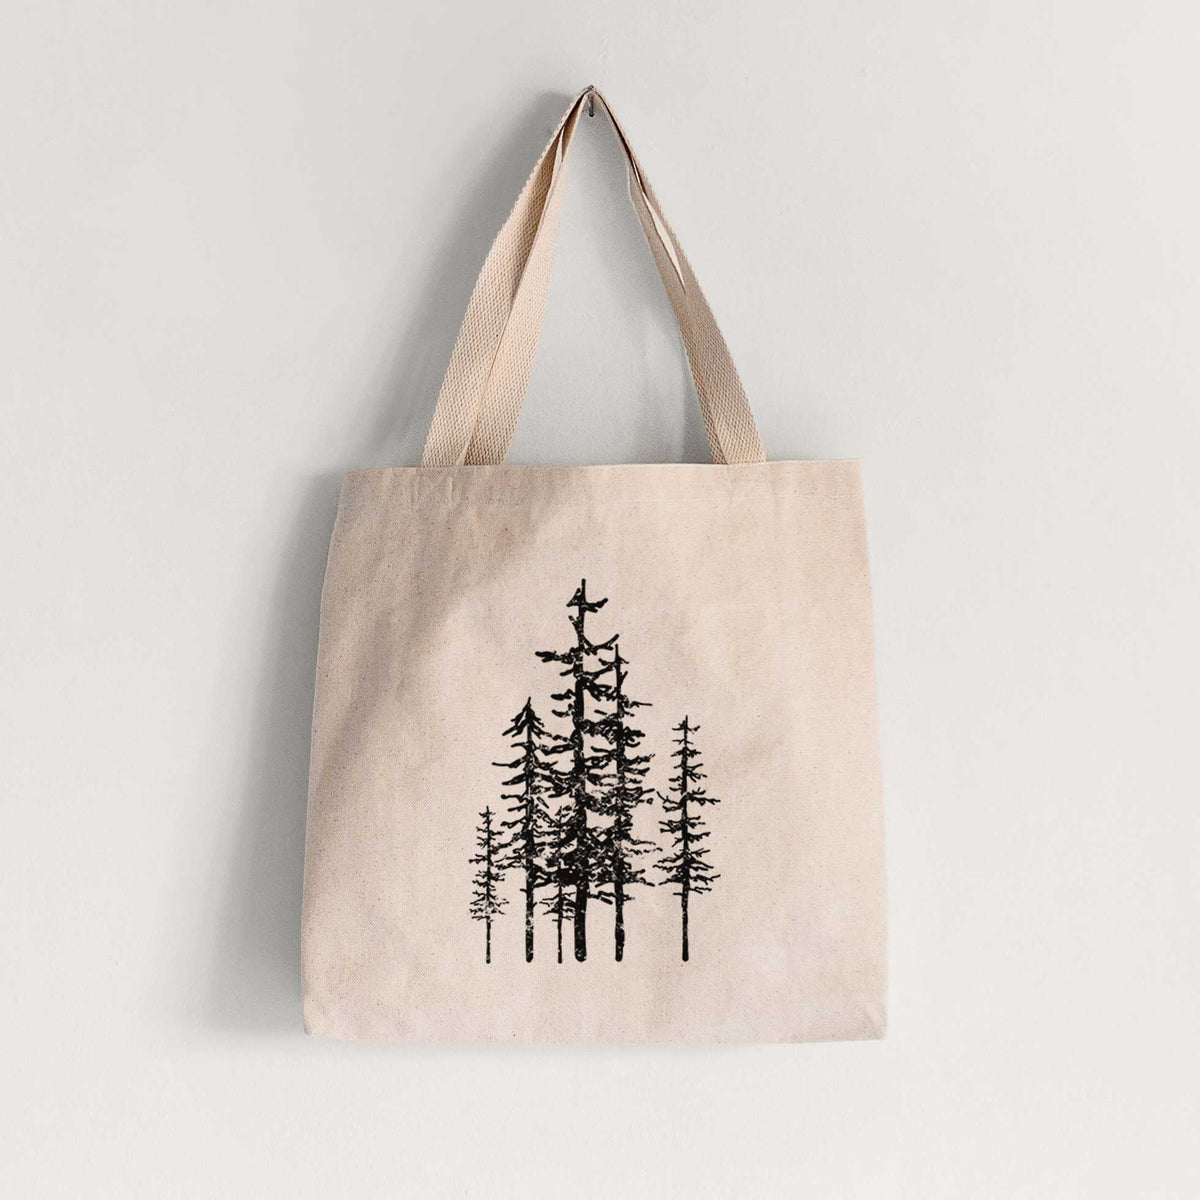 Evergreen Trees - Tote Bag